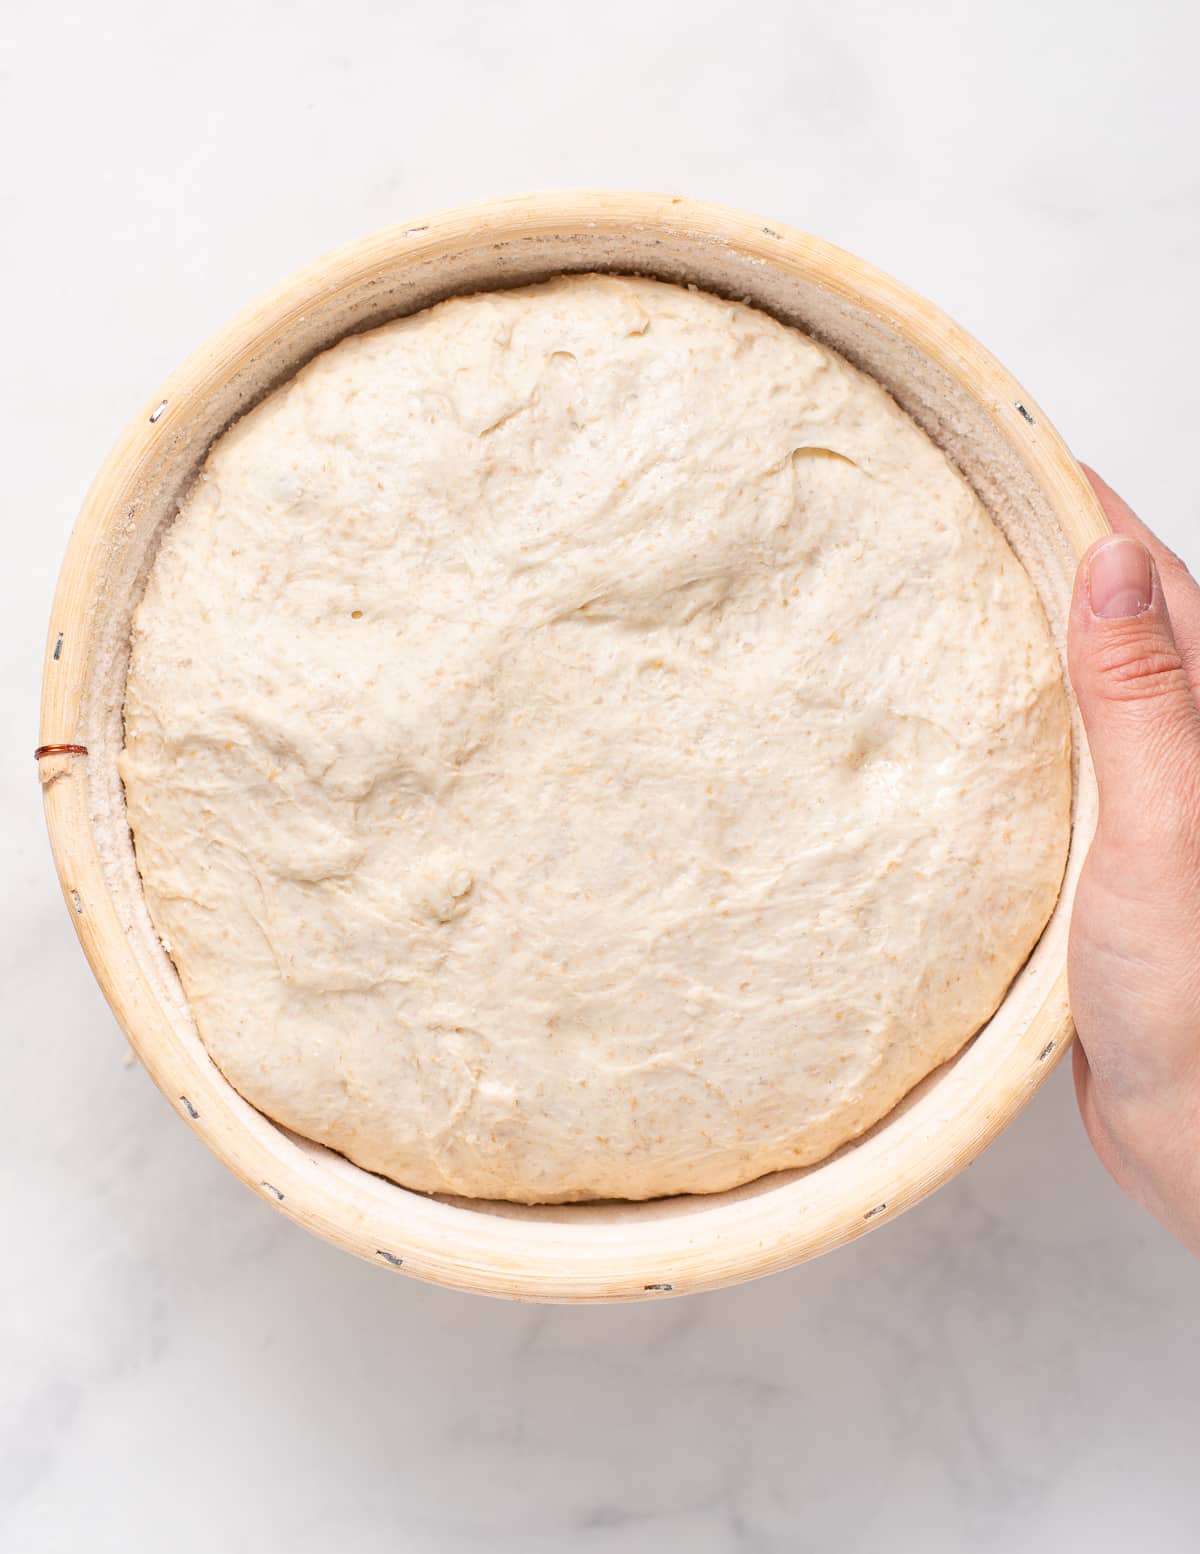 risen sourdough bread dough in a banneton